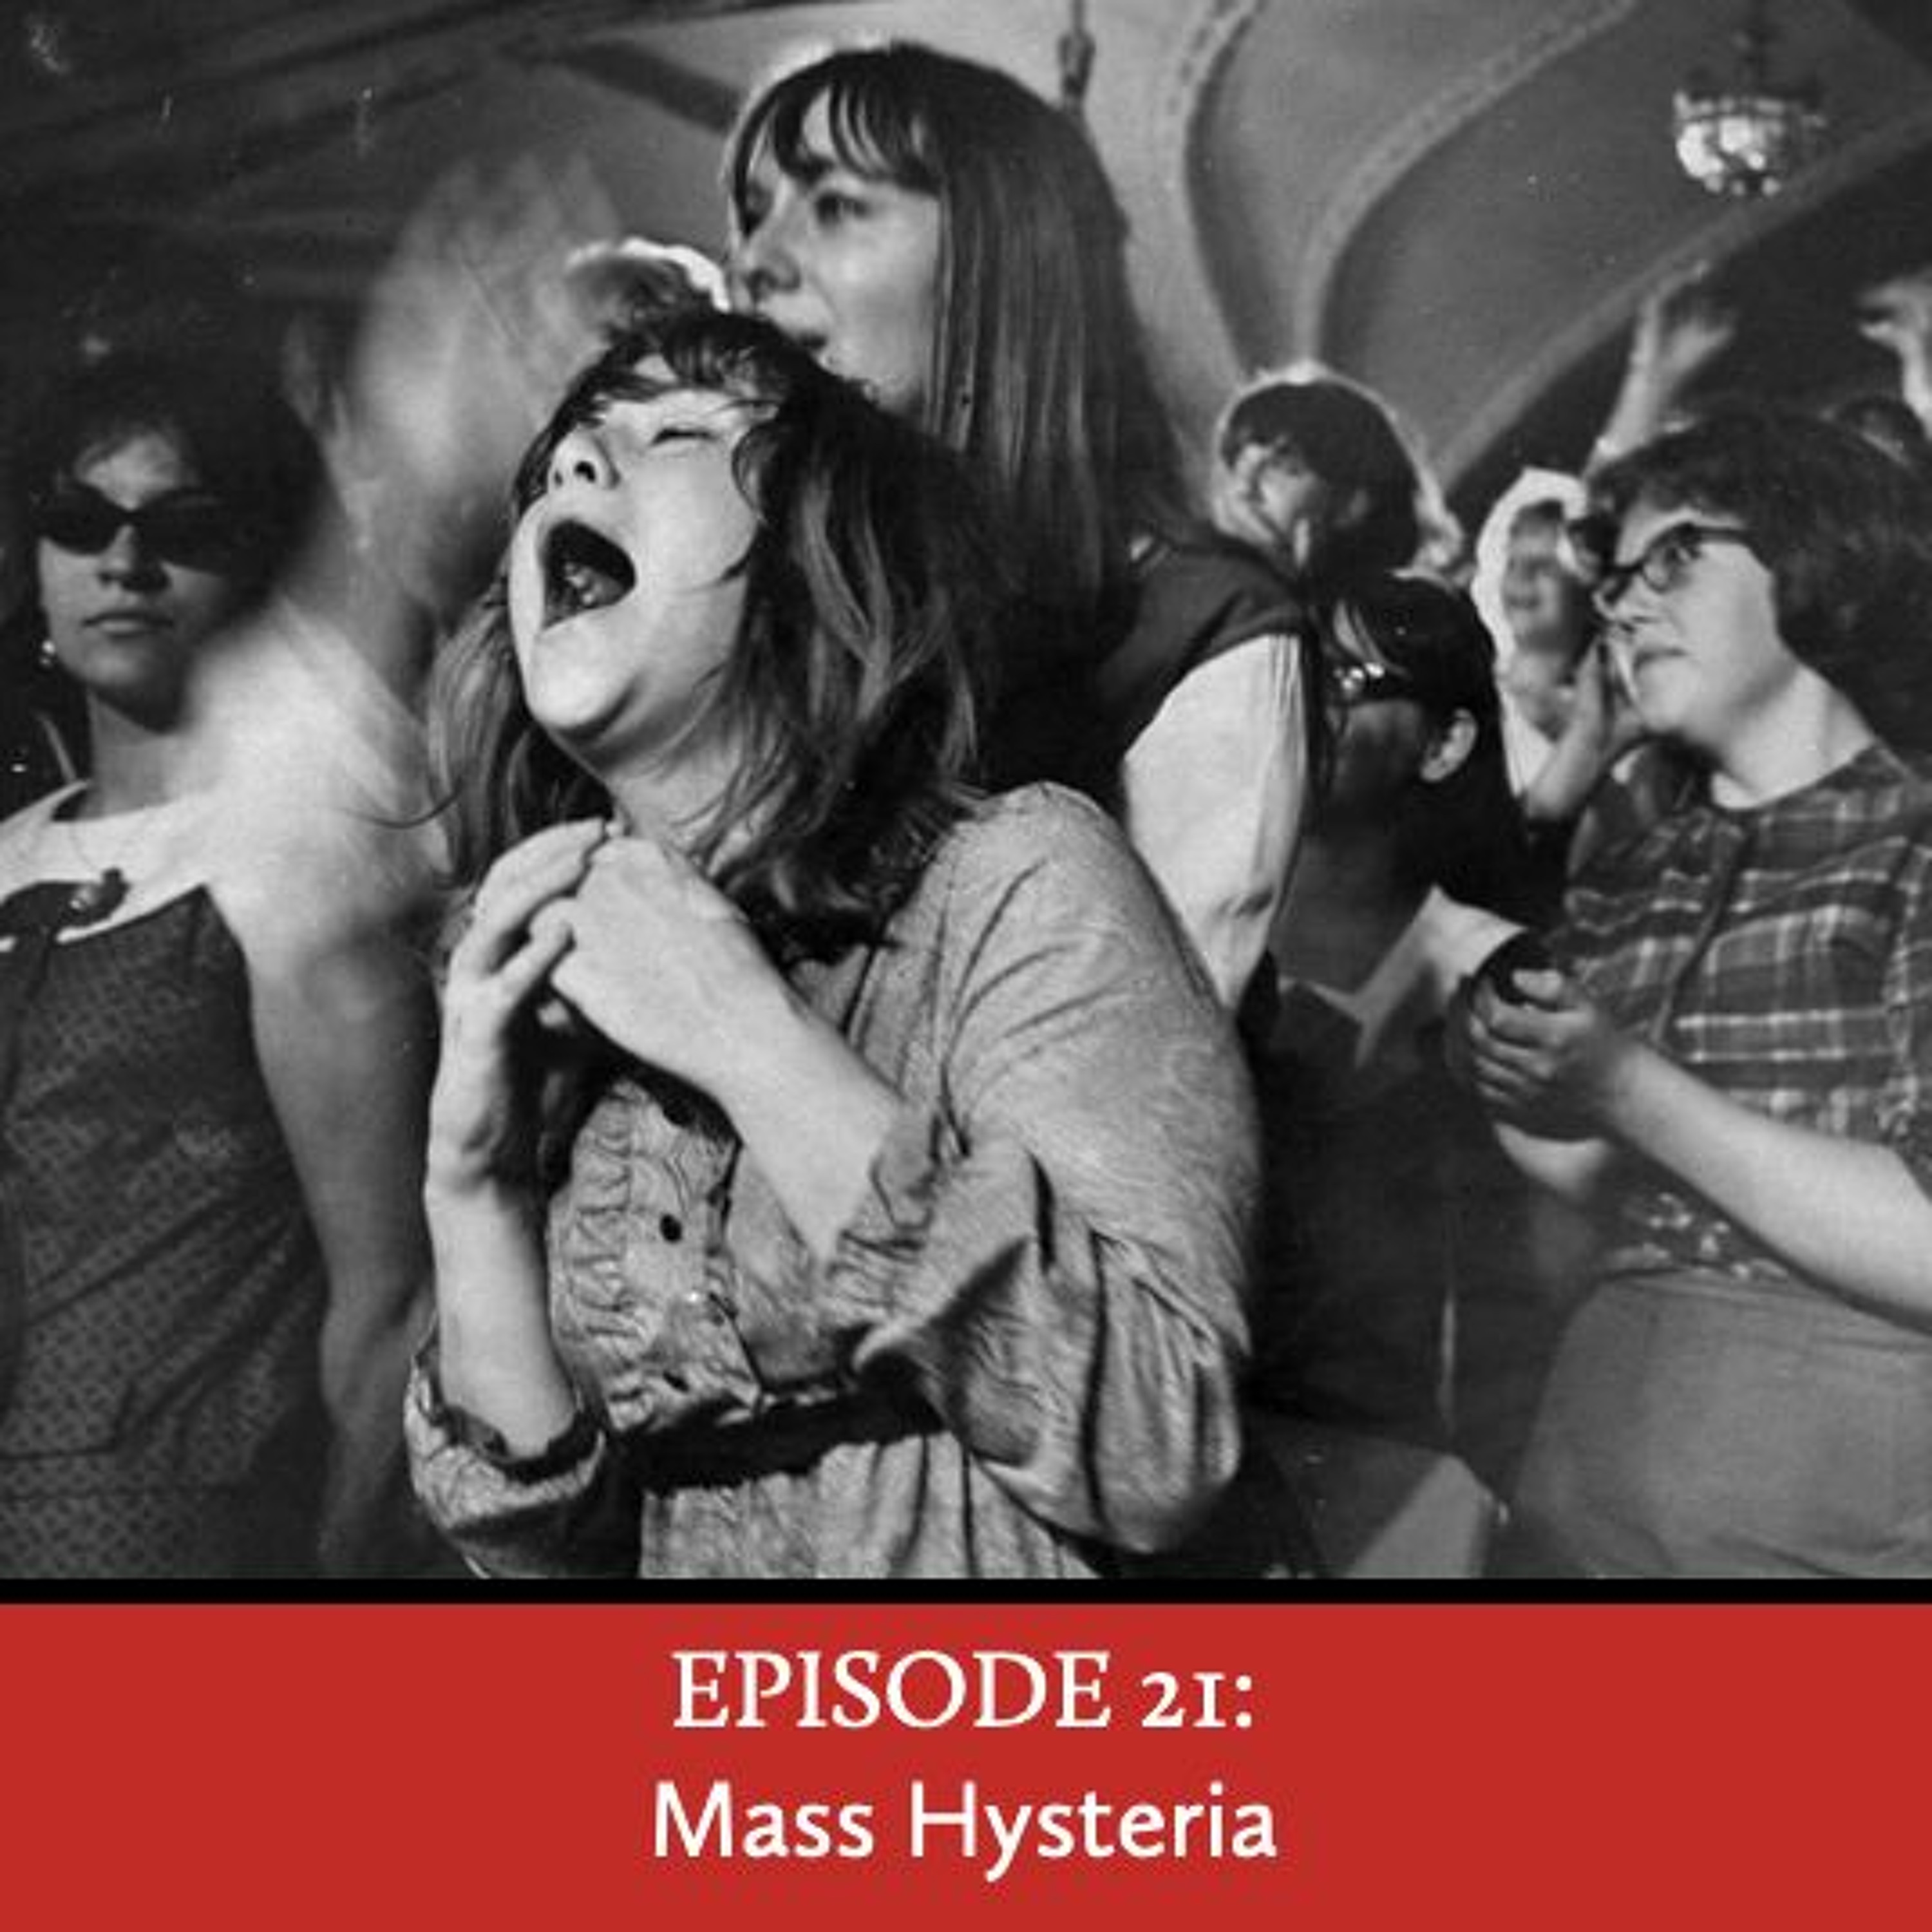 Episode 21: Mass Hysteria